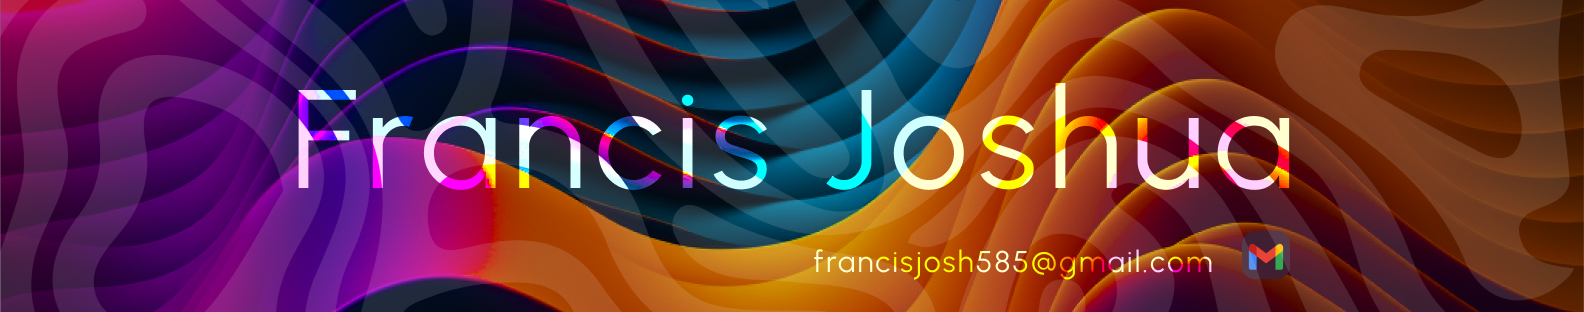 Francis Joshua's profile banner